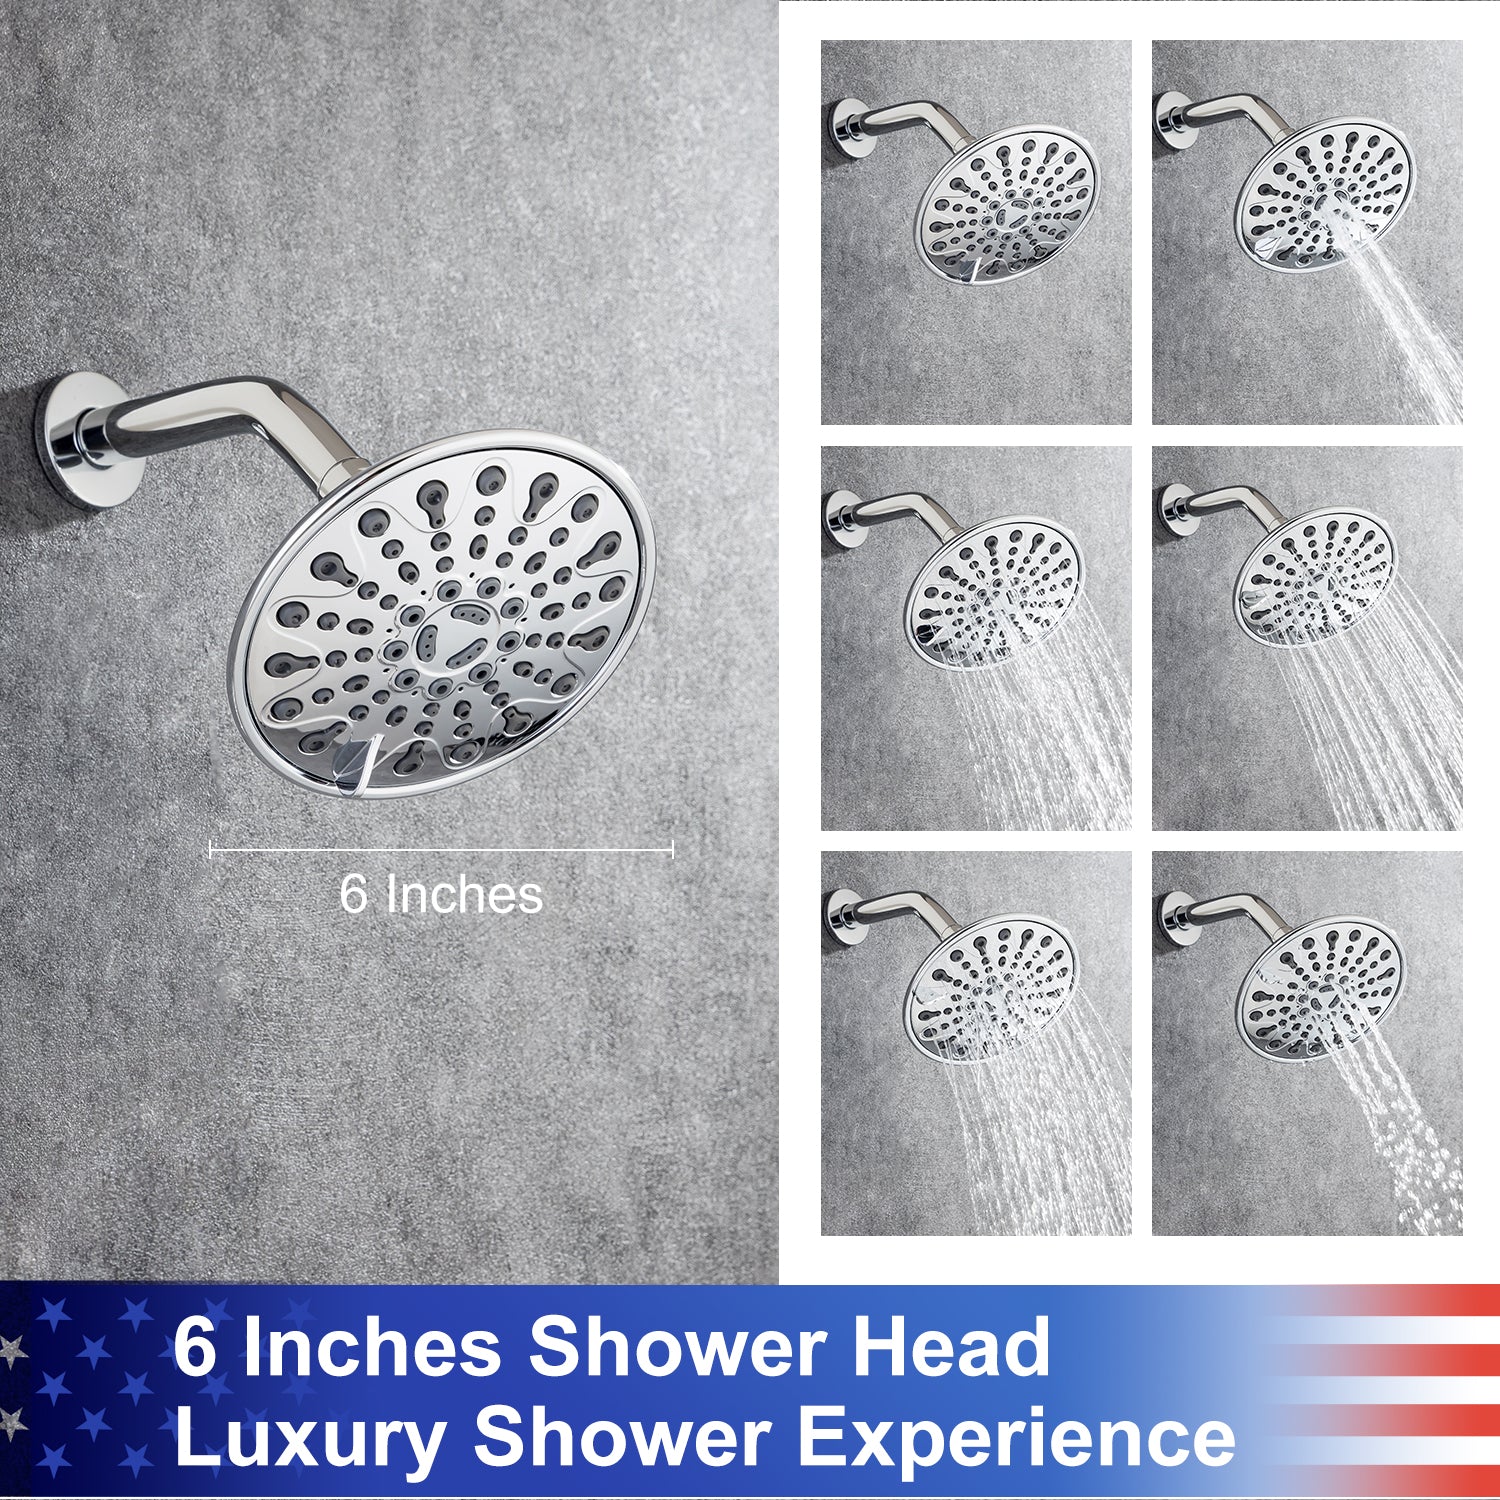 [Rainlex RX92202-6] 6-Spray Pressure-Balanced Shower Faucet With Rough-In Valve